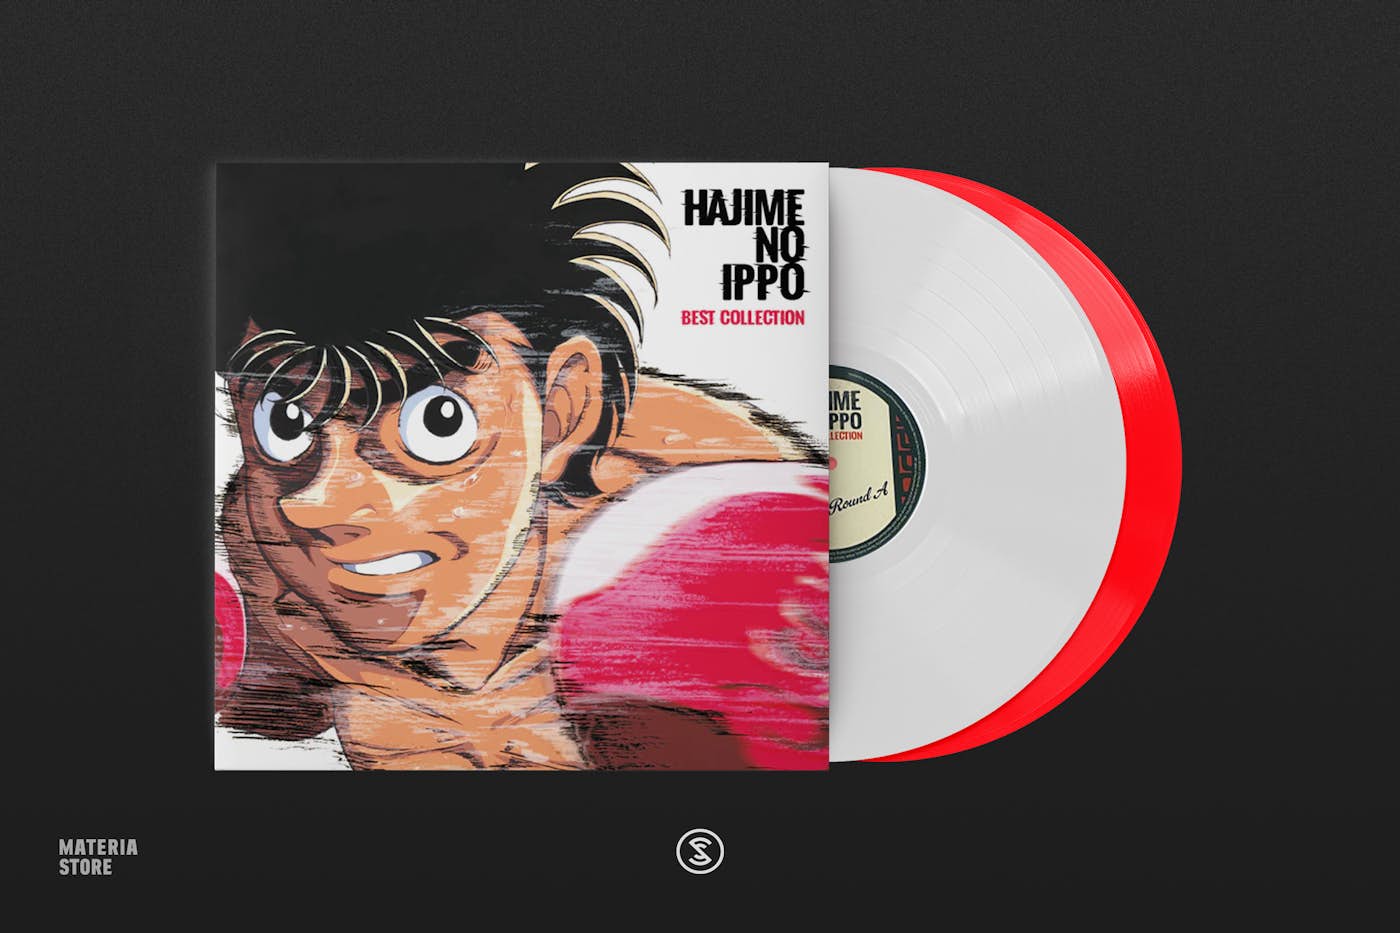 Hajime no Ippo The Fighting! TV Series Collection 2 [Blu-ray